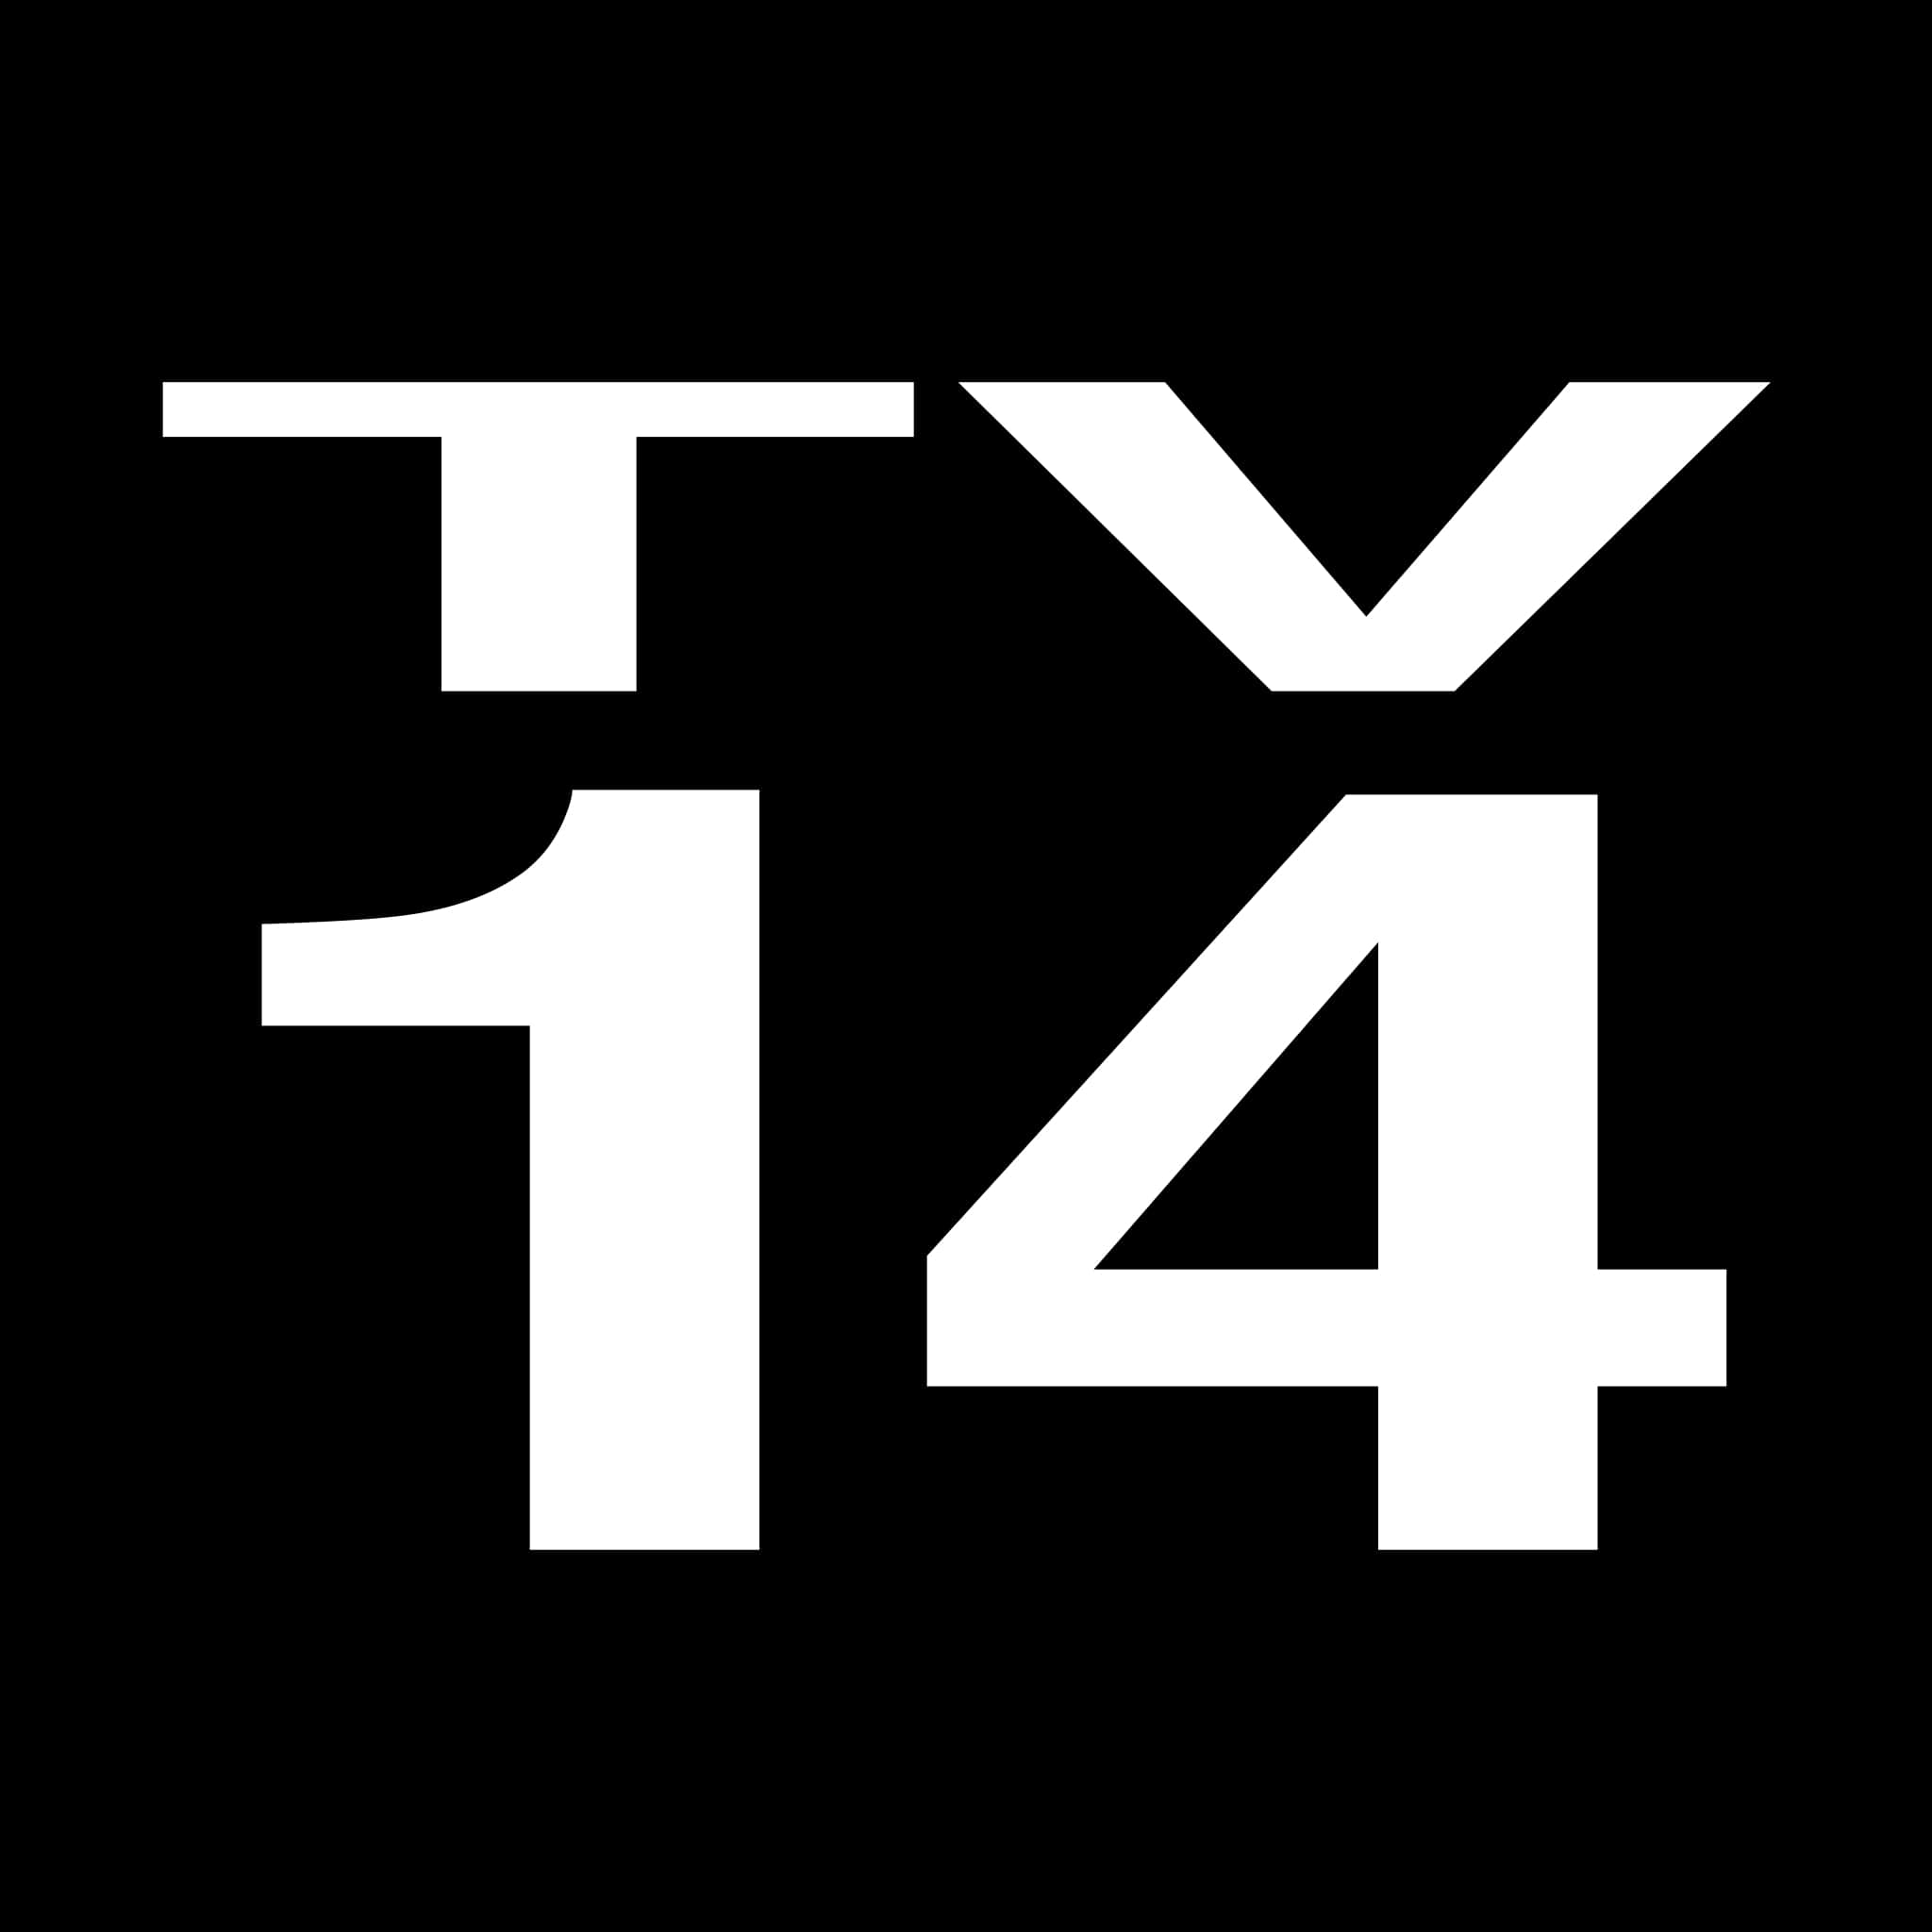 Ce este un rating TV-14?